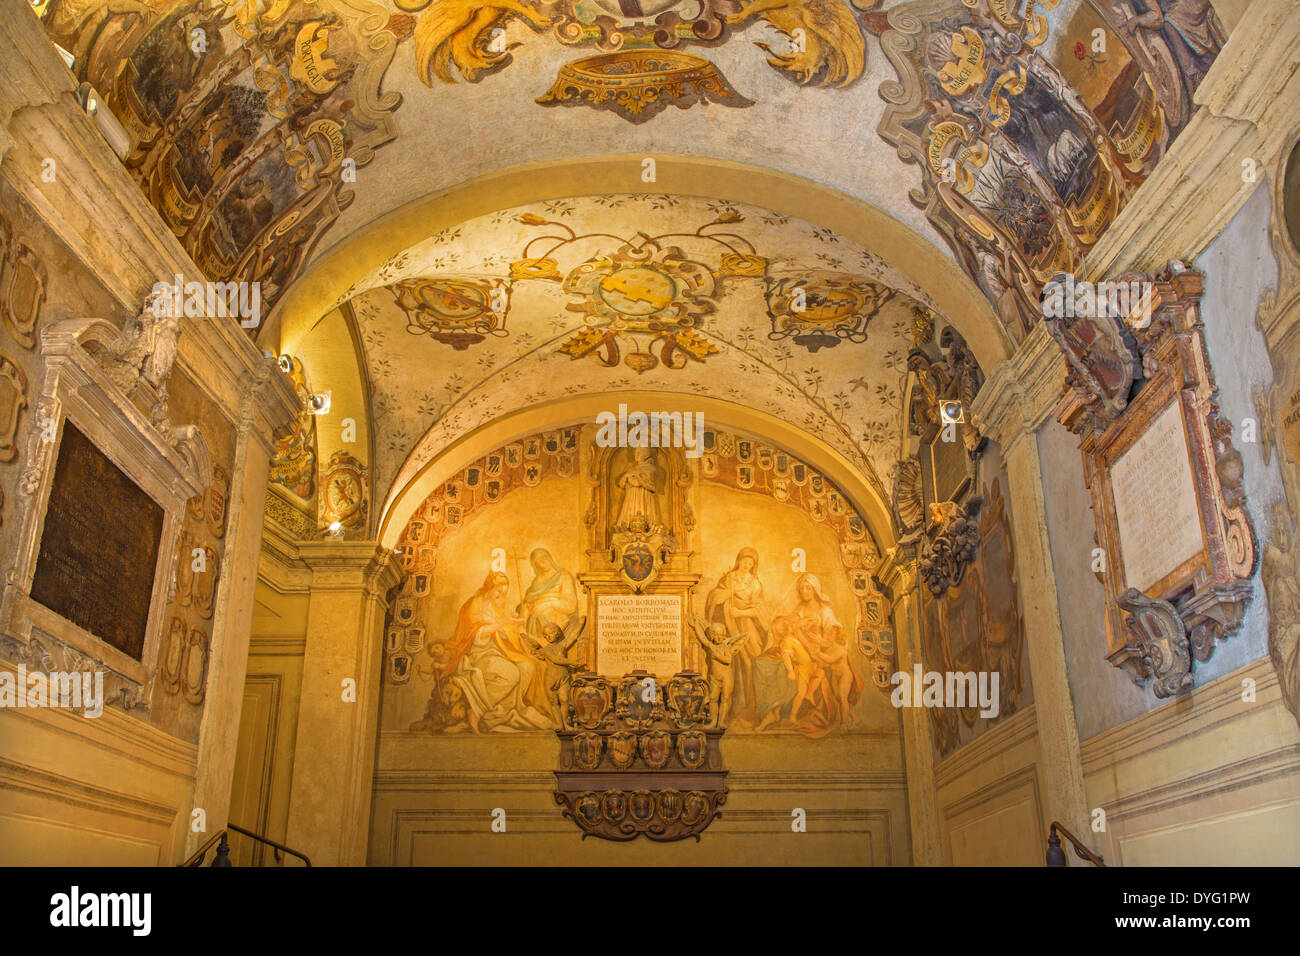 BOLOGNA, ITALY - MARCH 15, 2014: Ceiling and walls of external atrium of Archiginnasio. Stock Photo